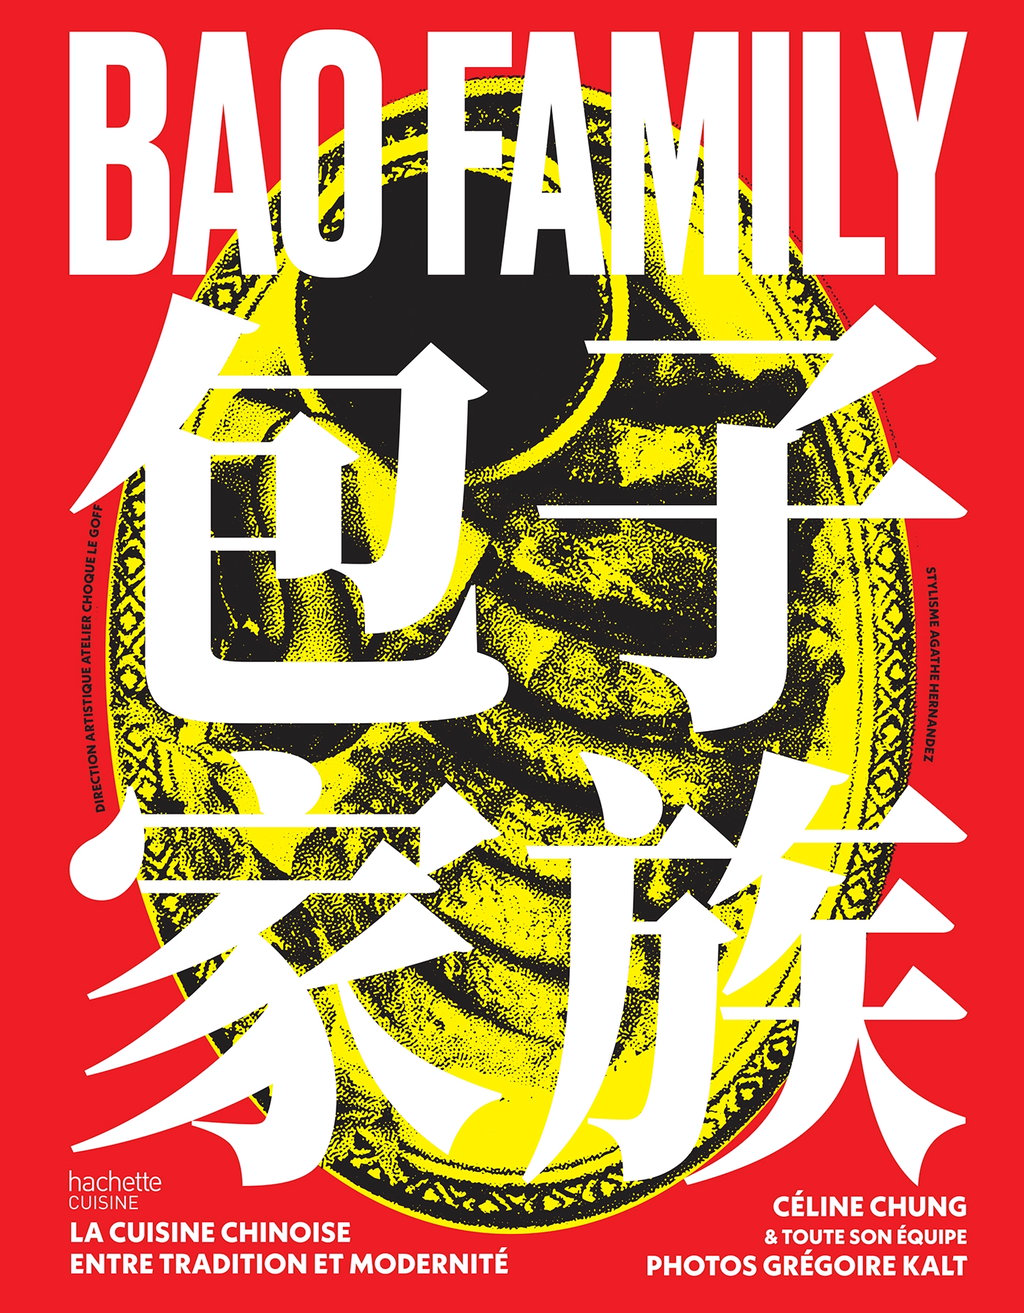 BAO Family restaurants playlists